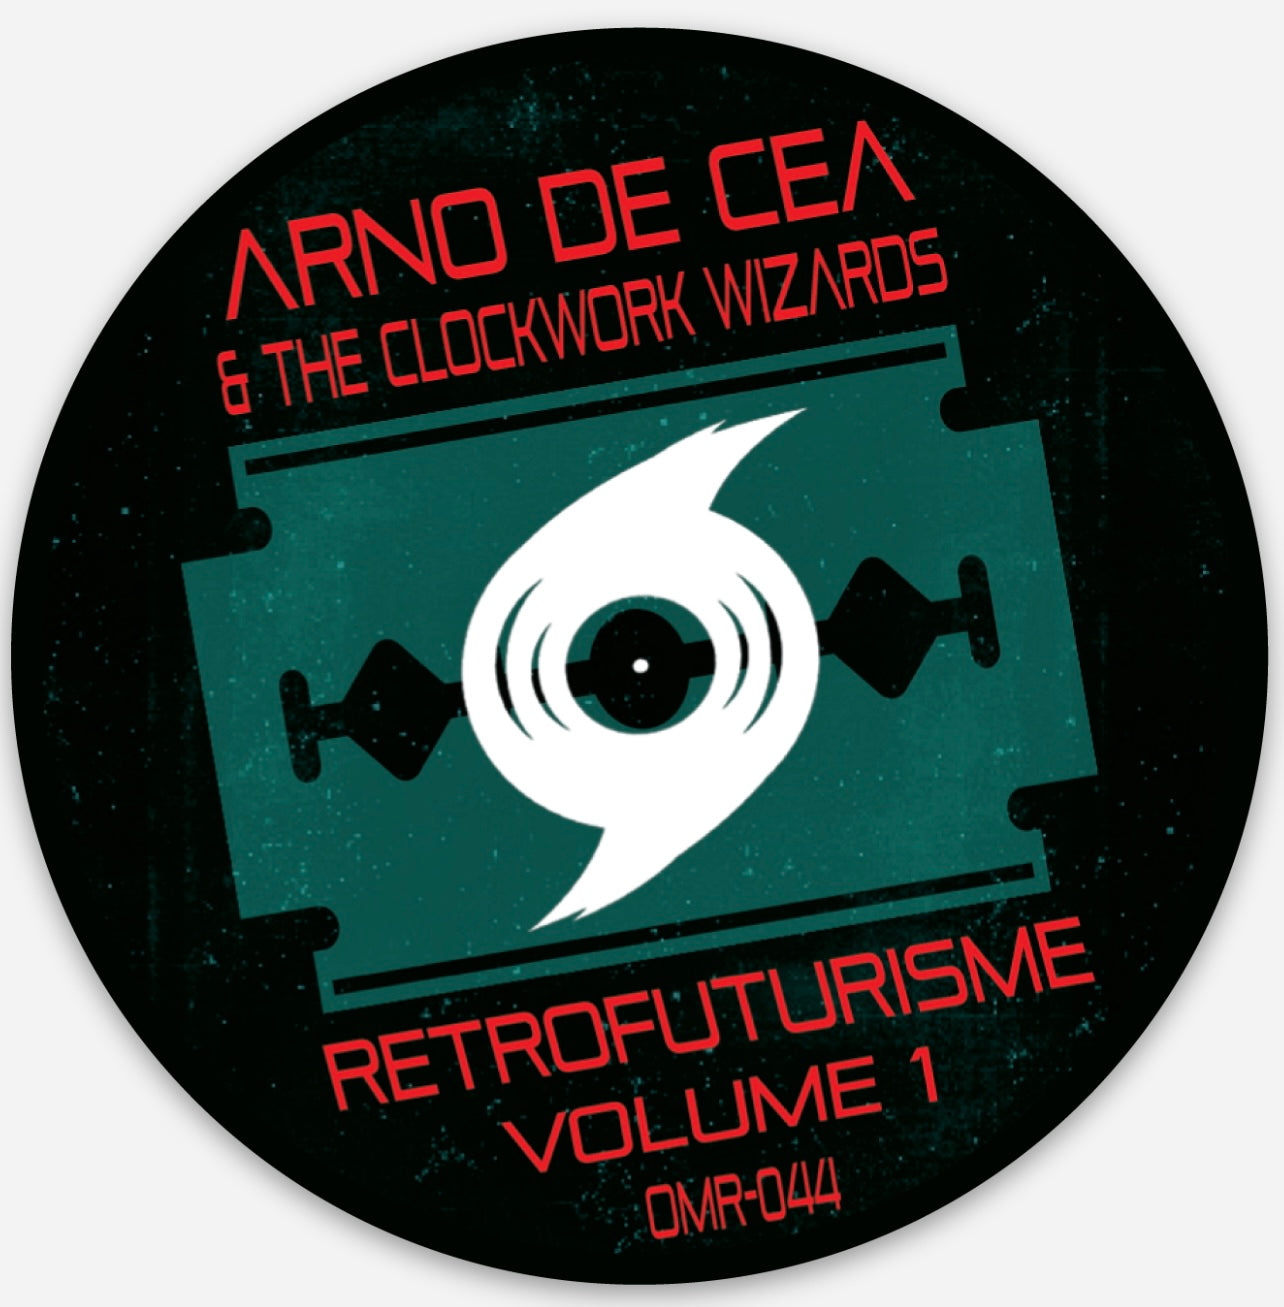 OMRBUN-004 Arno De Cea & The Clockwork Wizards (Bundle)